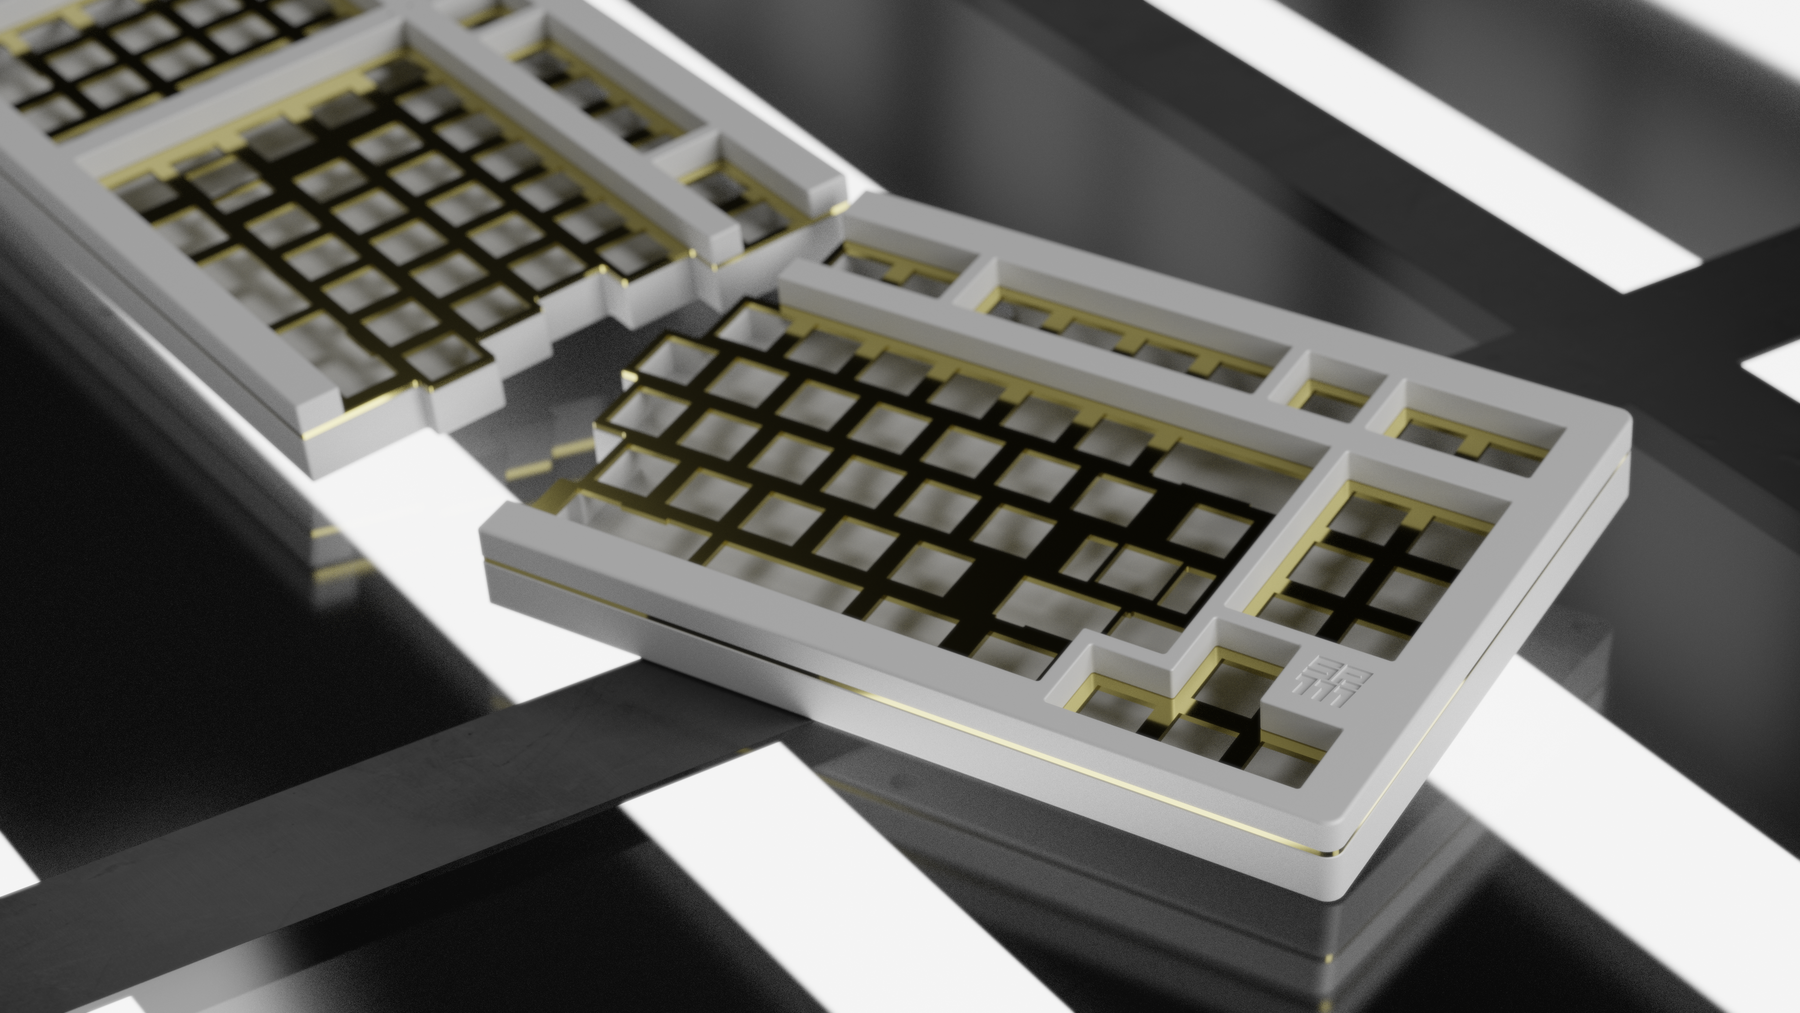 [GB] SP-111 Split Keyboard Kit